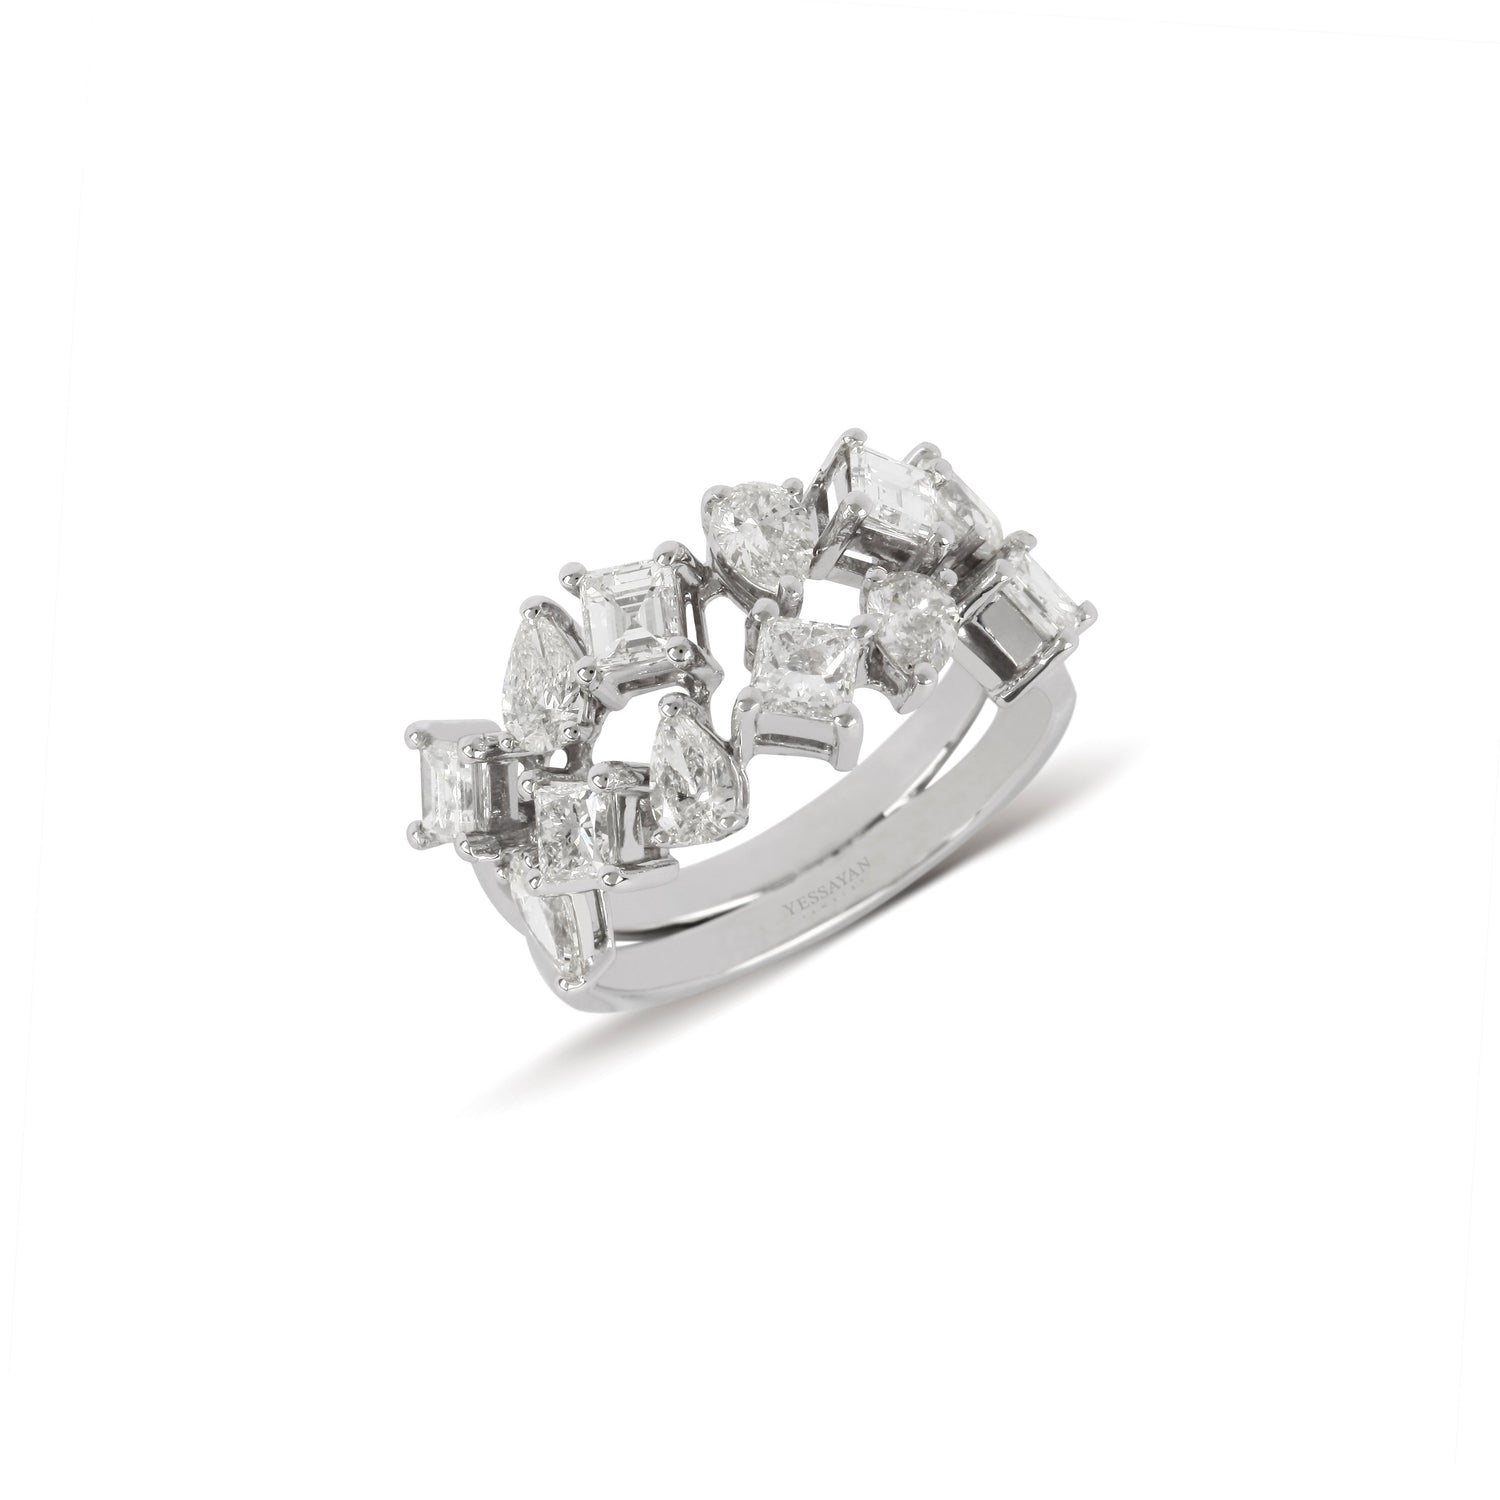 Double Band Multi-Shape Diamond Ring | jewellery store | diamond rings